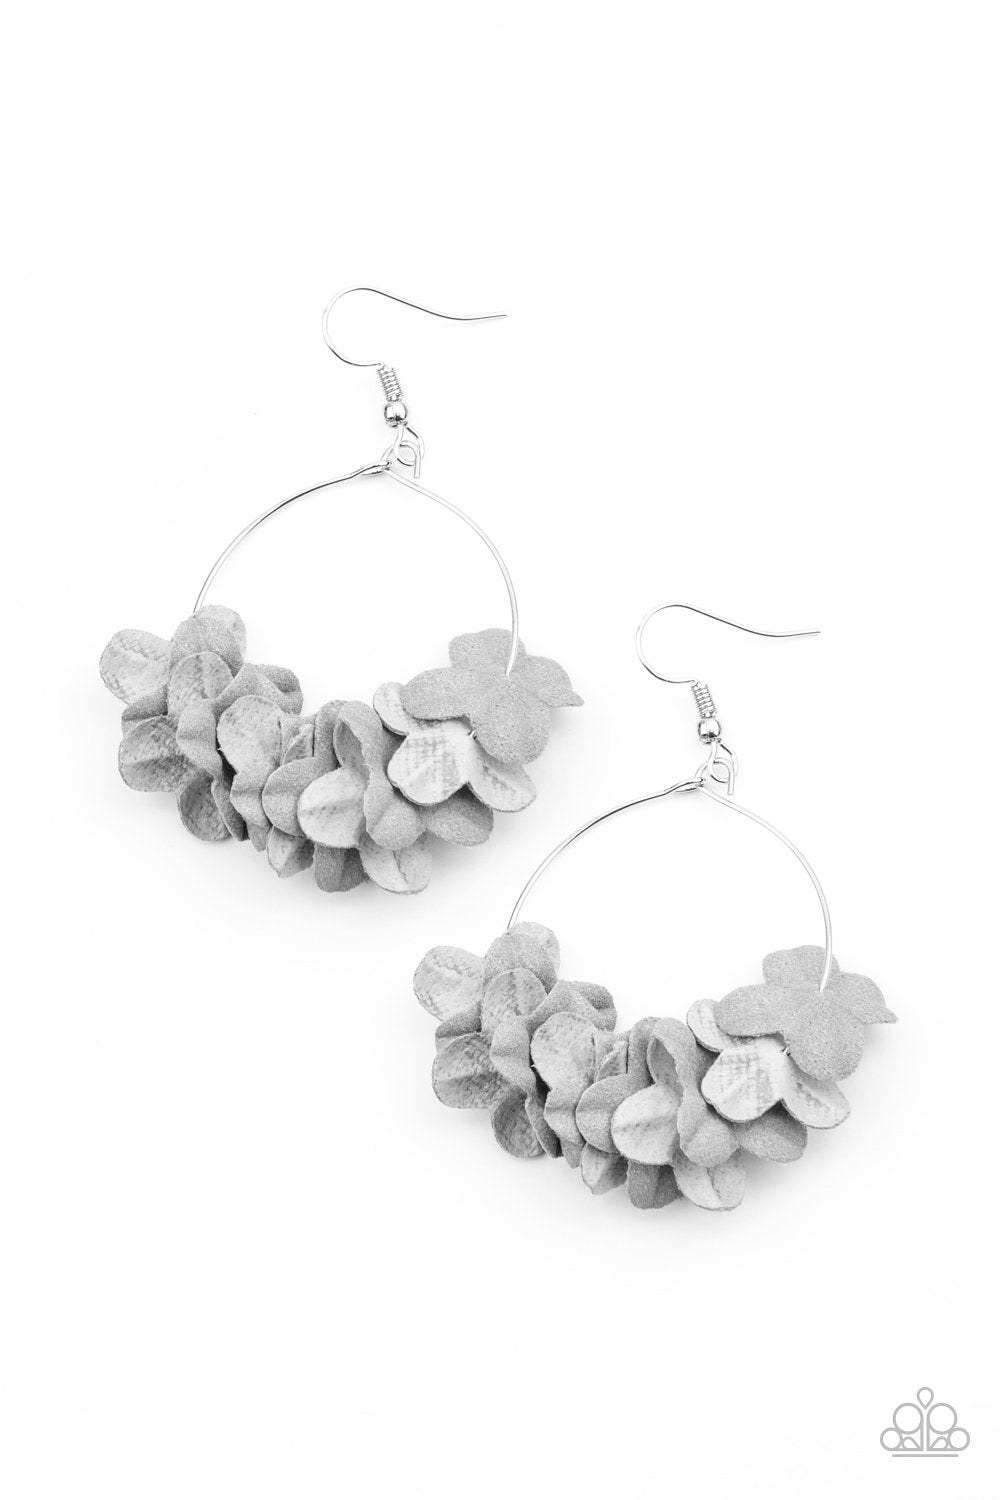 Flirty Florets Silver Flower Hoop Earrings - Paparazzi Accessories- lightbox - CarasShop.com - $5 Jewelry by Cara Jewels